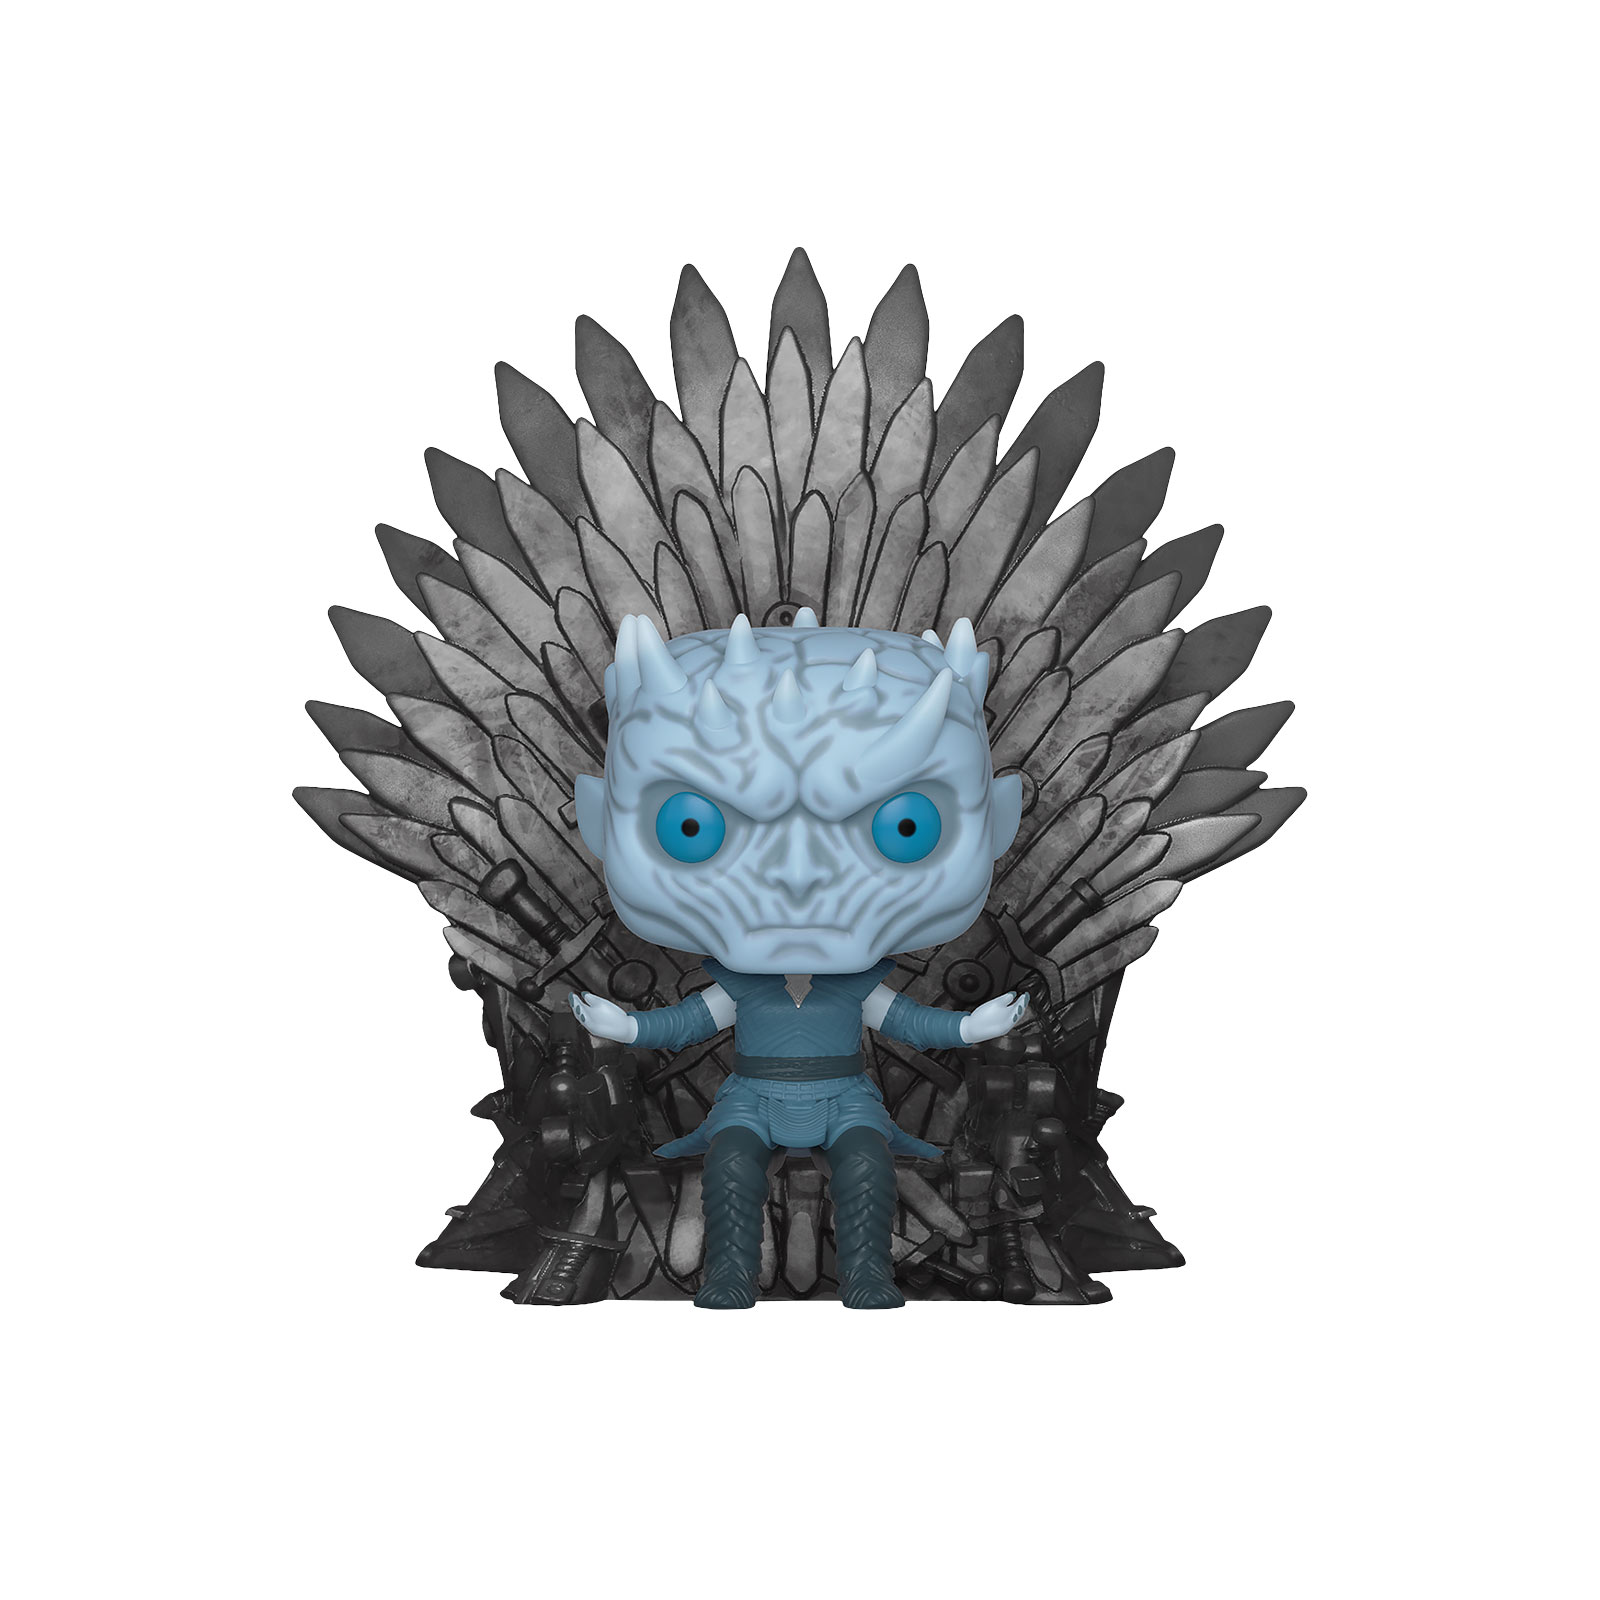 Game of Thrones - Night King with Iron Throne Funko Pop Figurine